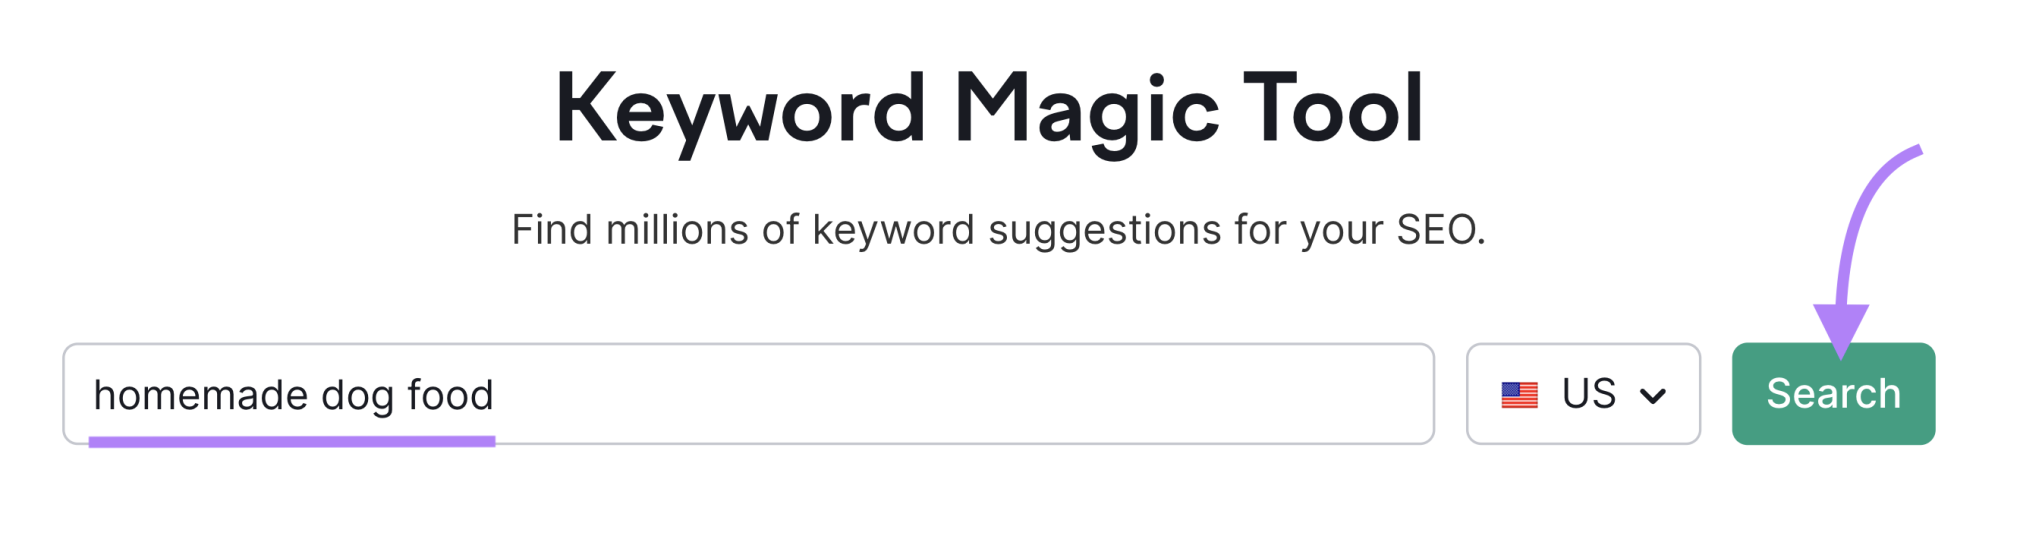 searching seed keyword in keyword magic tool